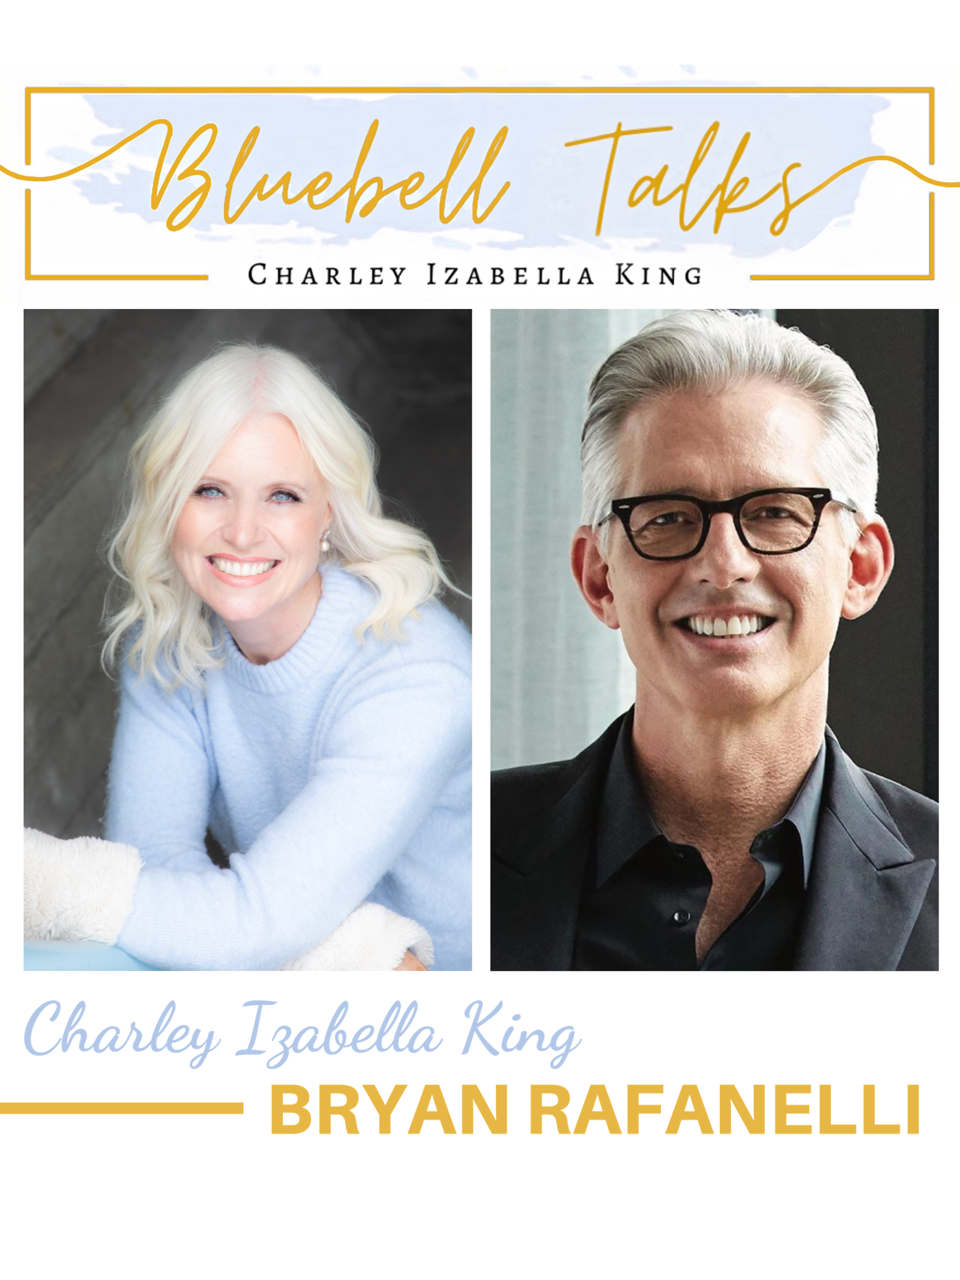 Bluebell Talks - Bryan Rafanelli